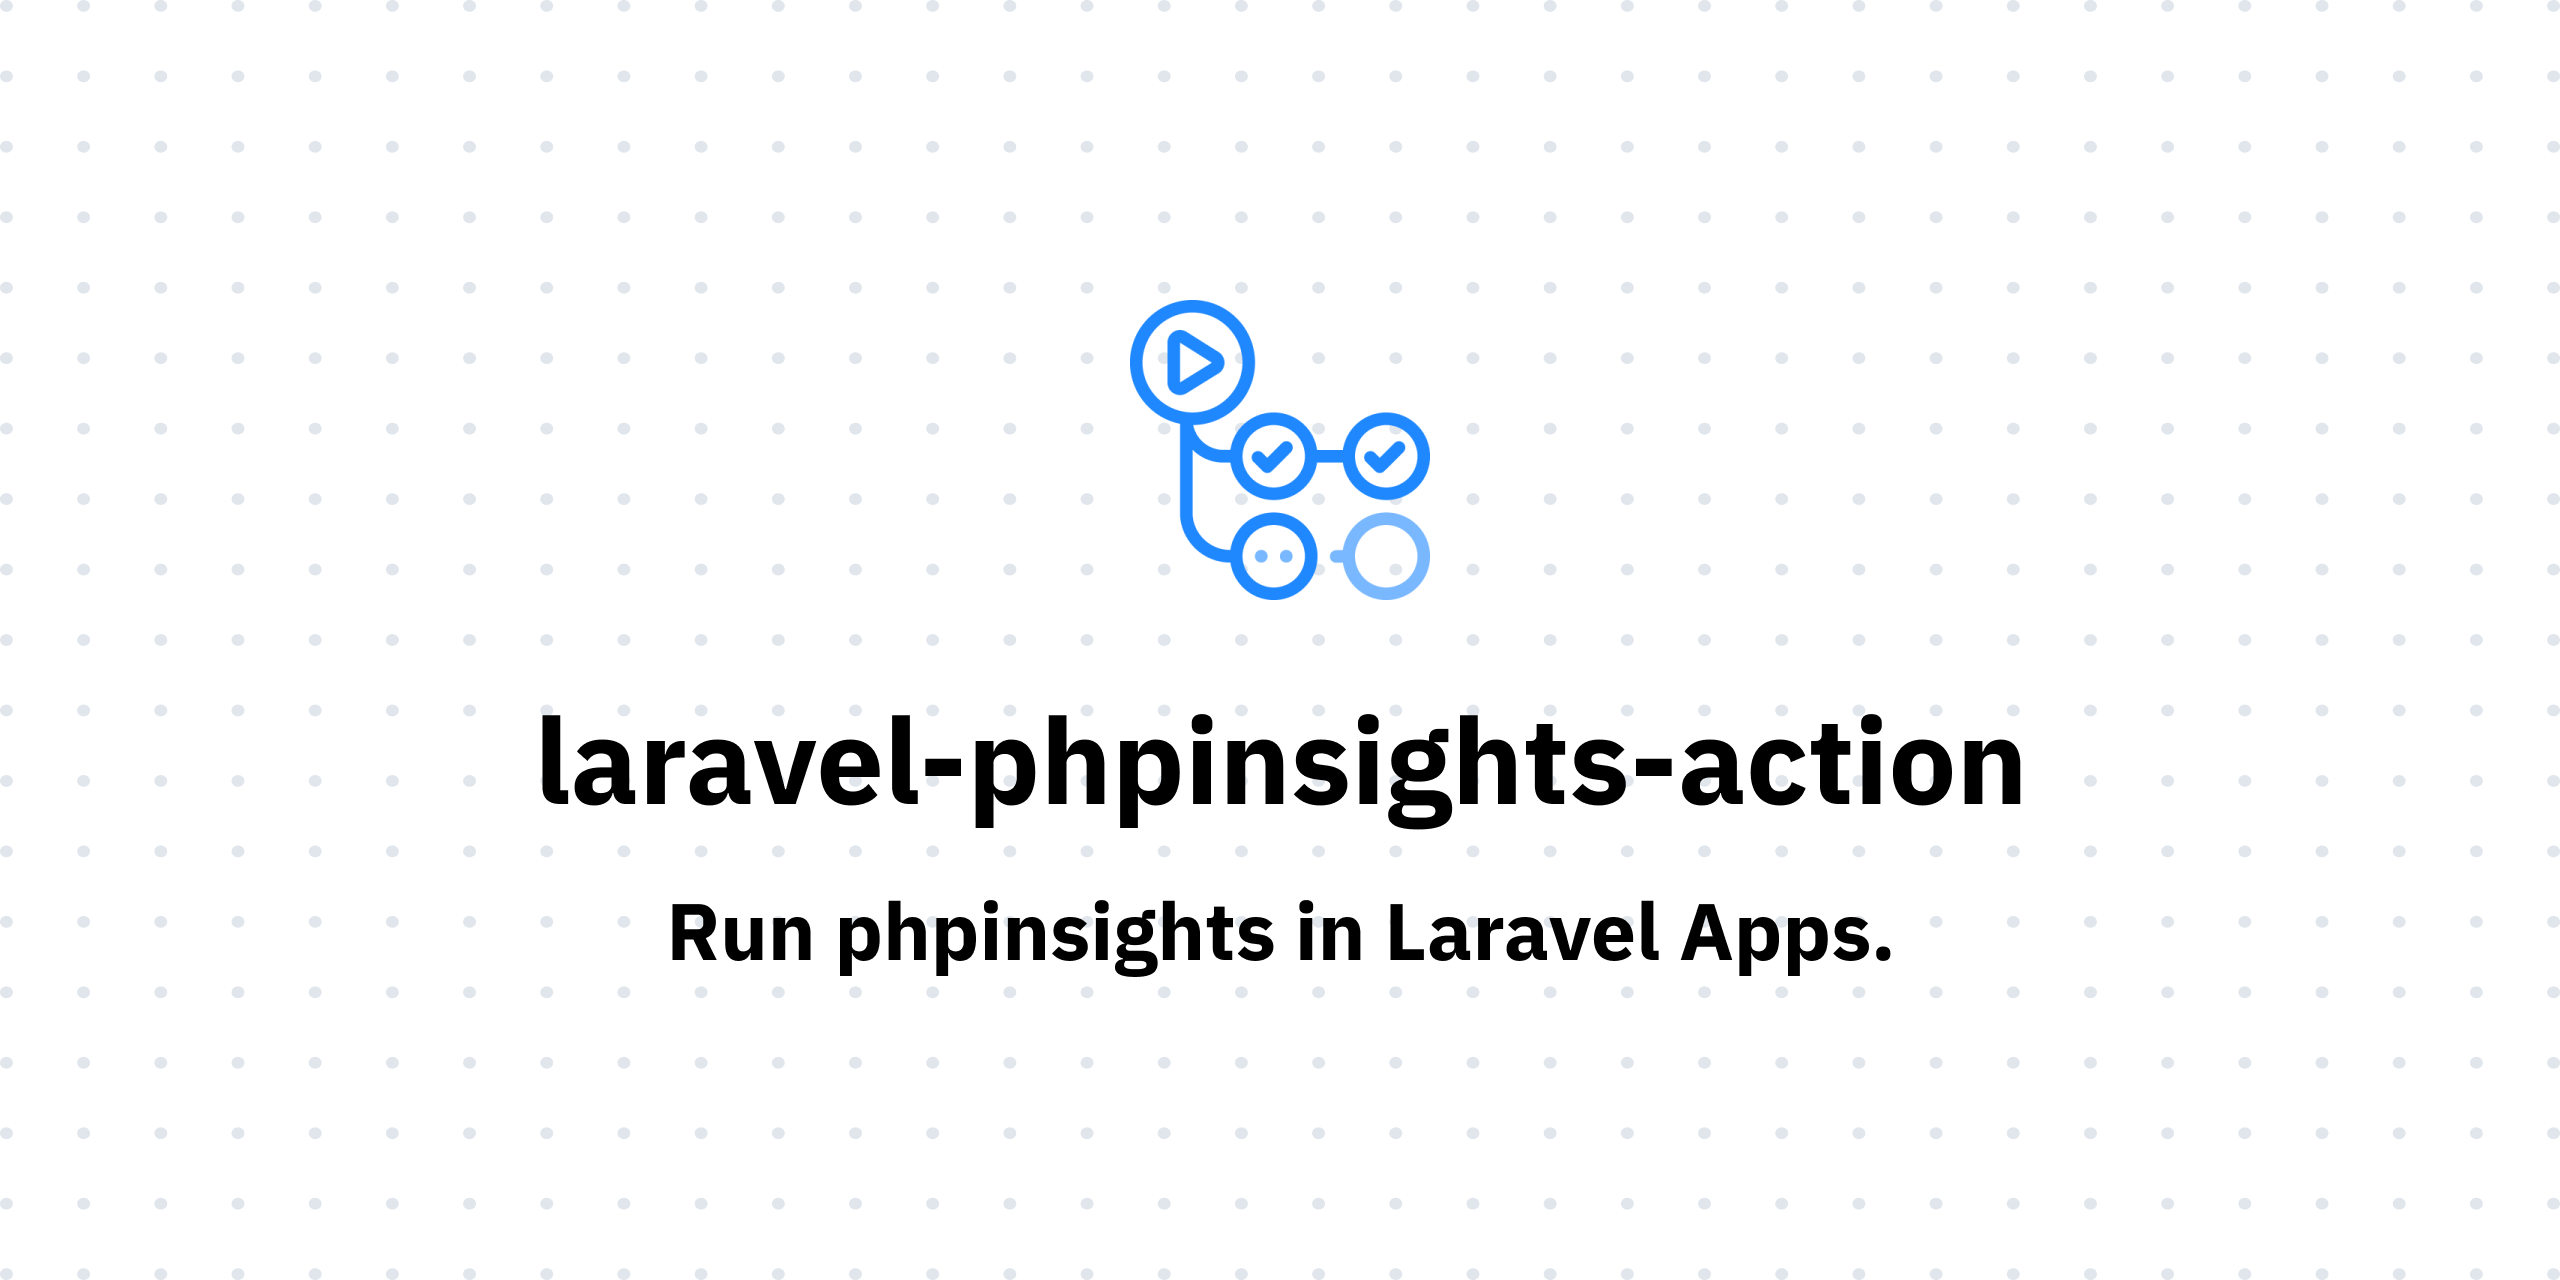 laravel-phpinsights-action